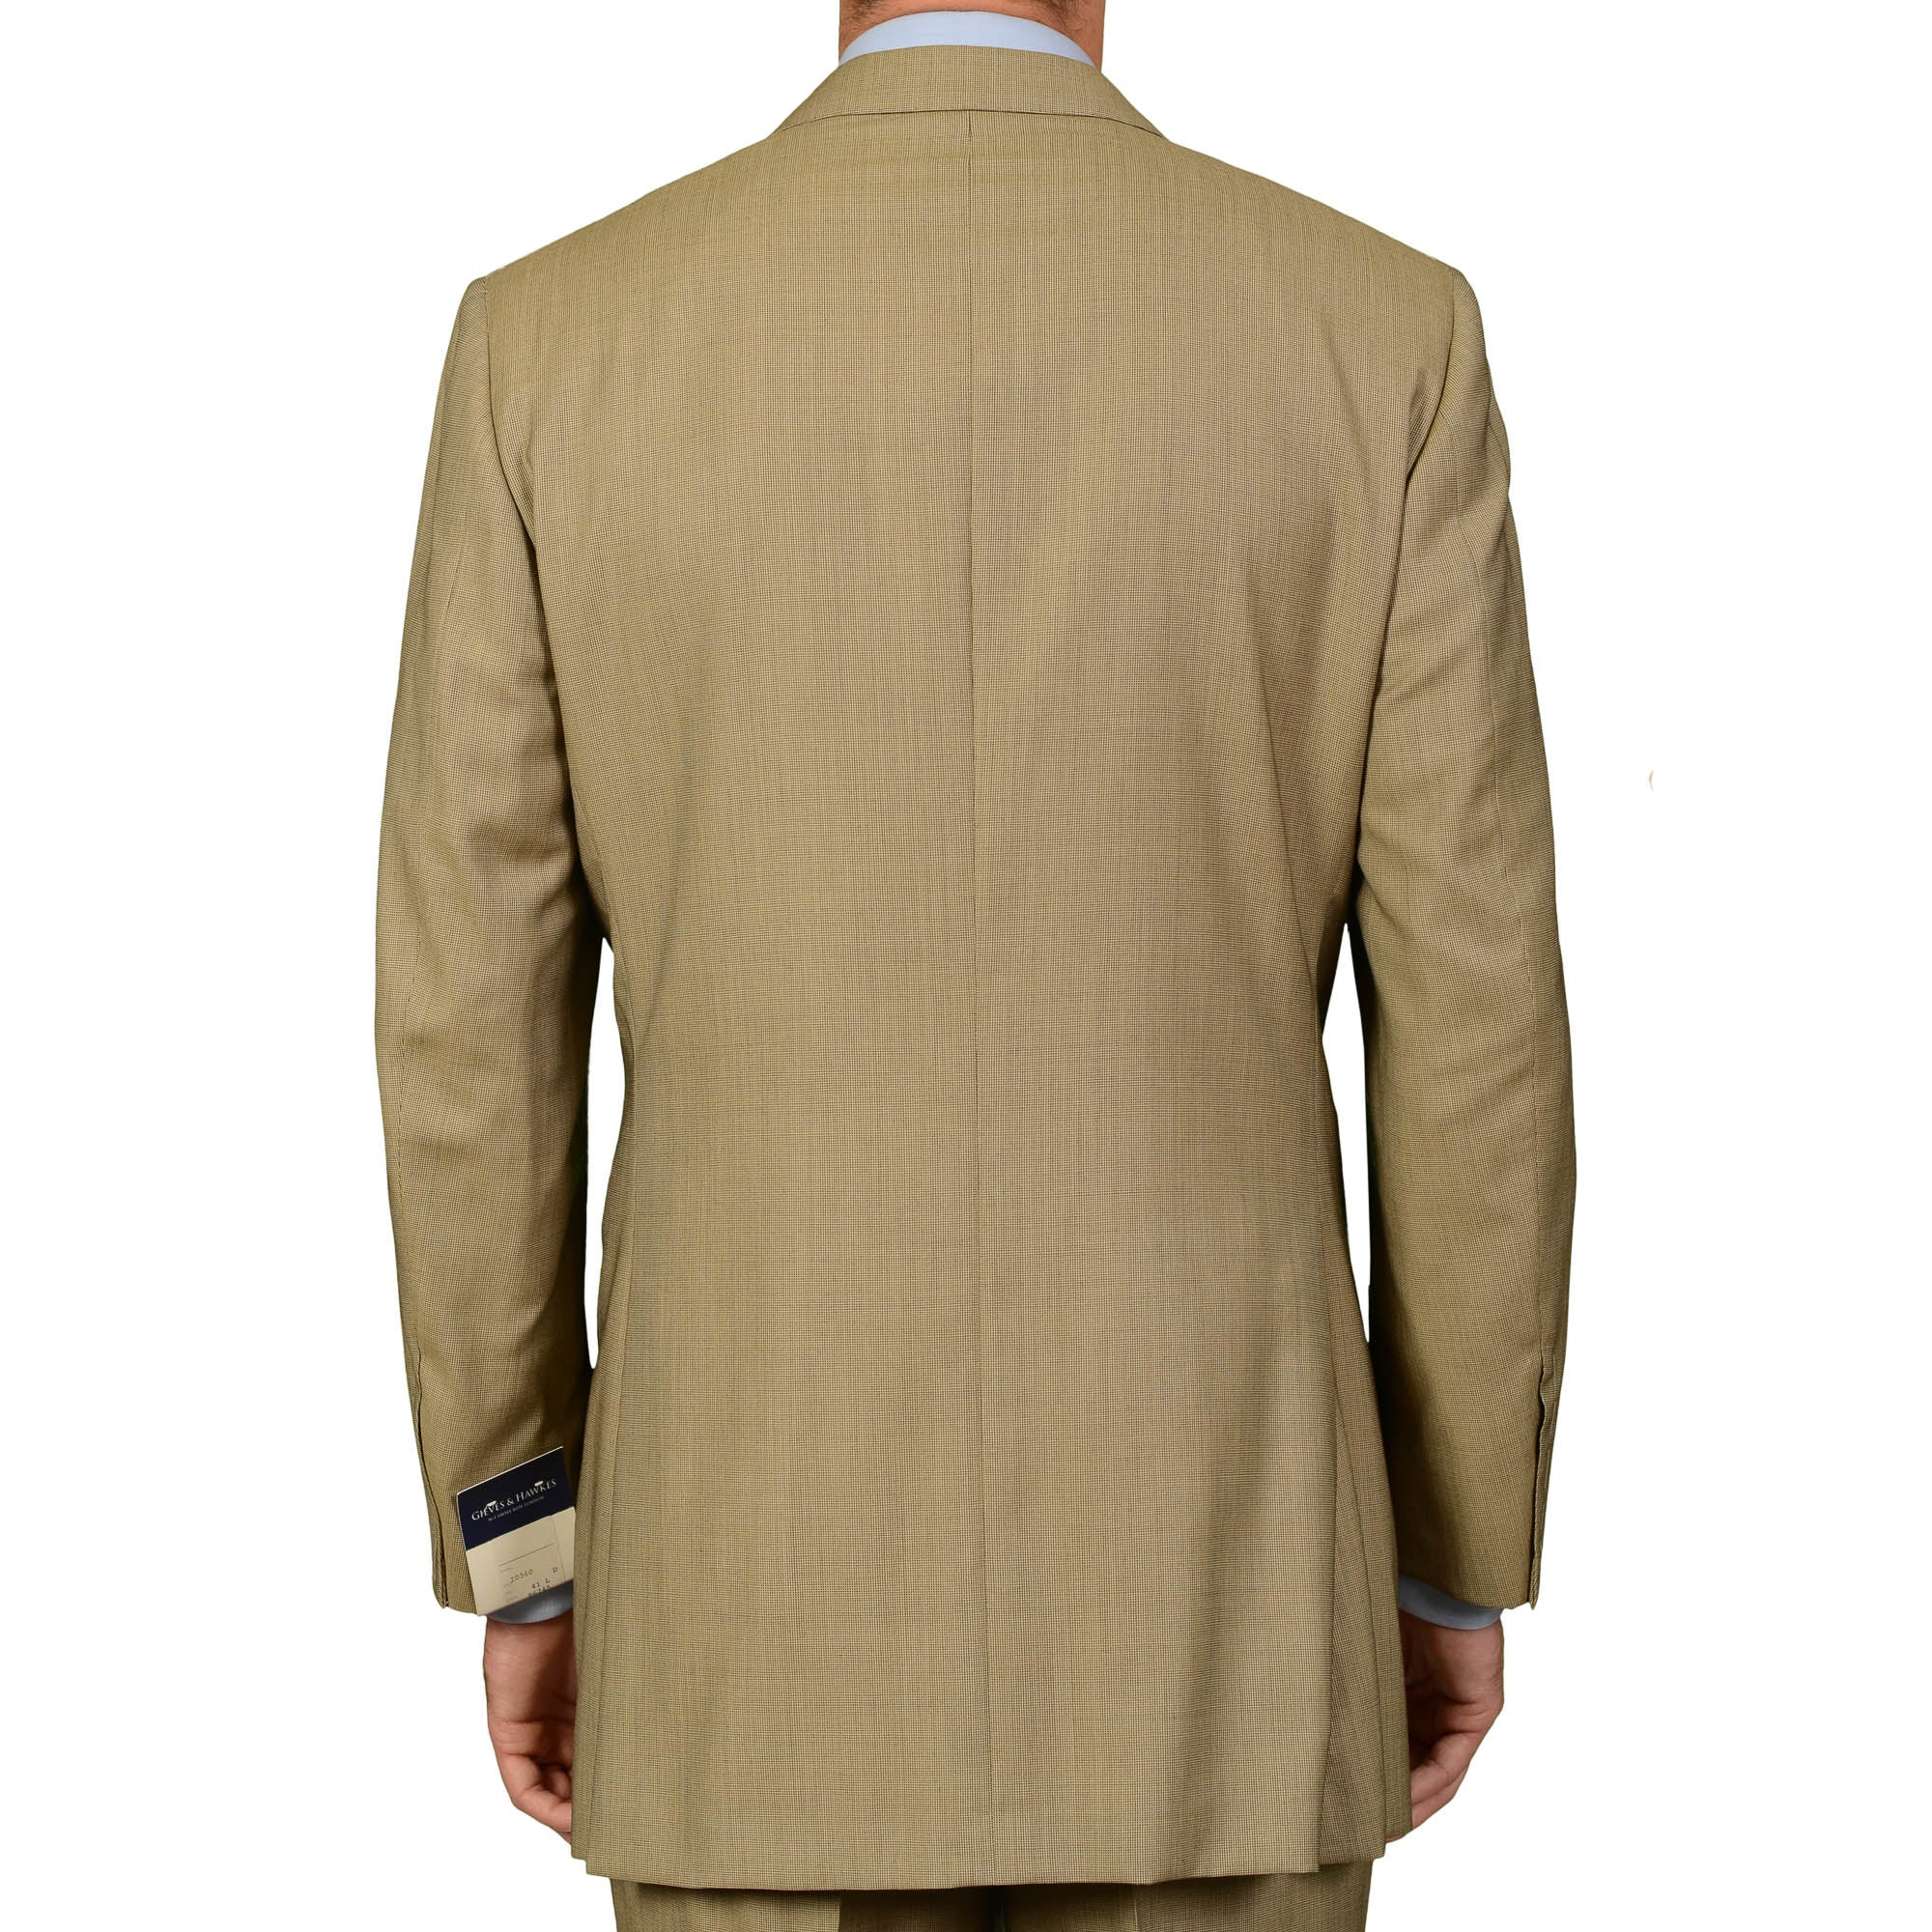 GIEVES & HAWKES Tan Nailhead Wool Super 120's Suit EU 51 NEW US 41 Long